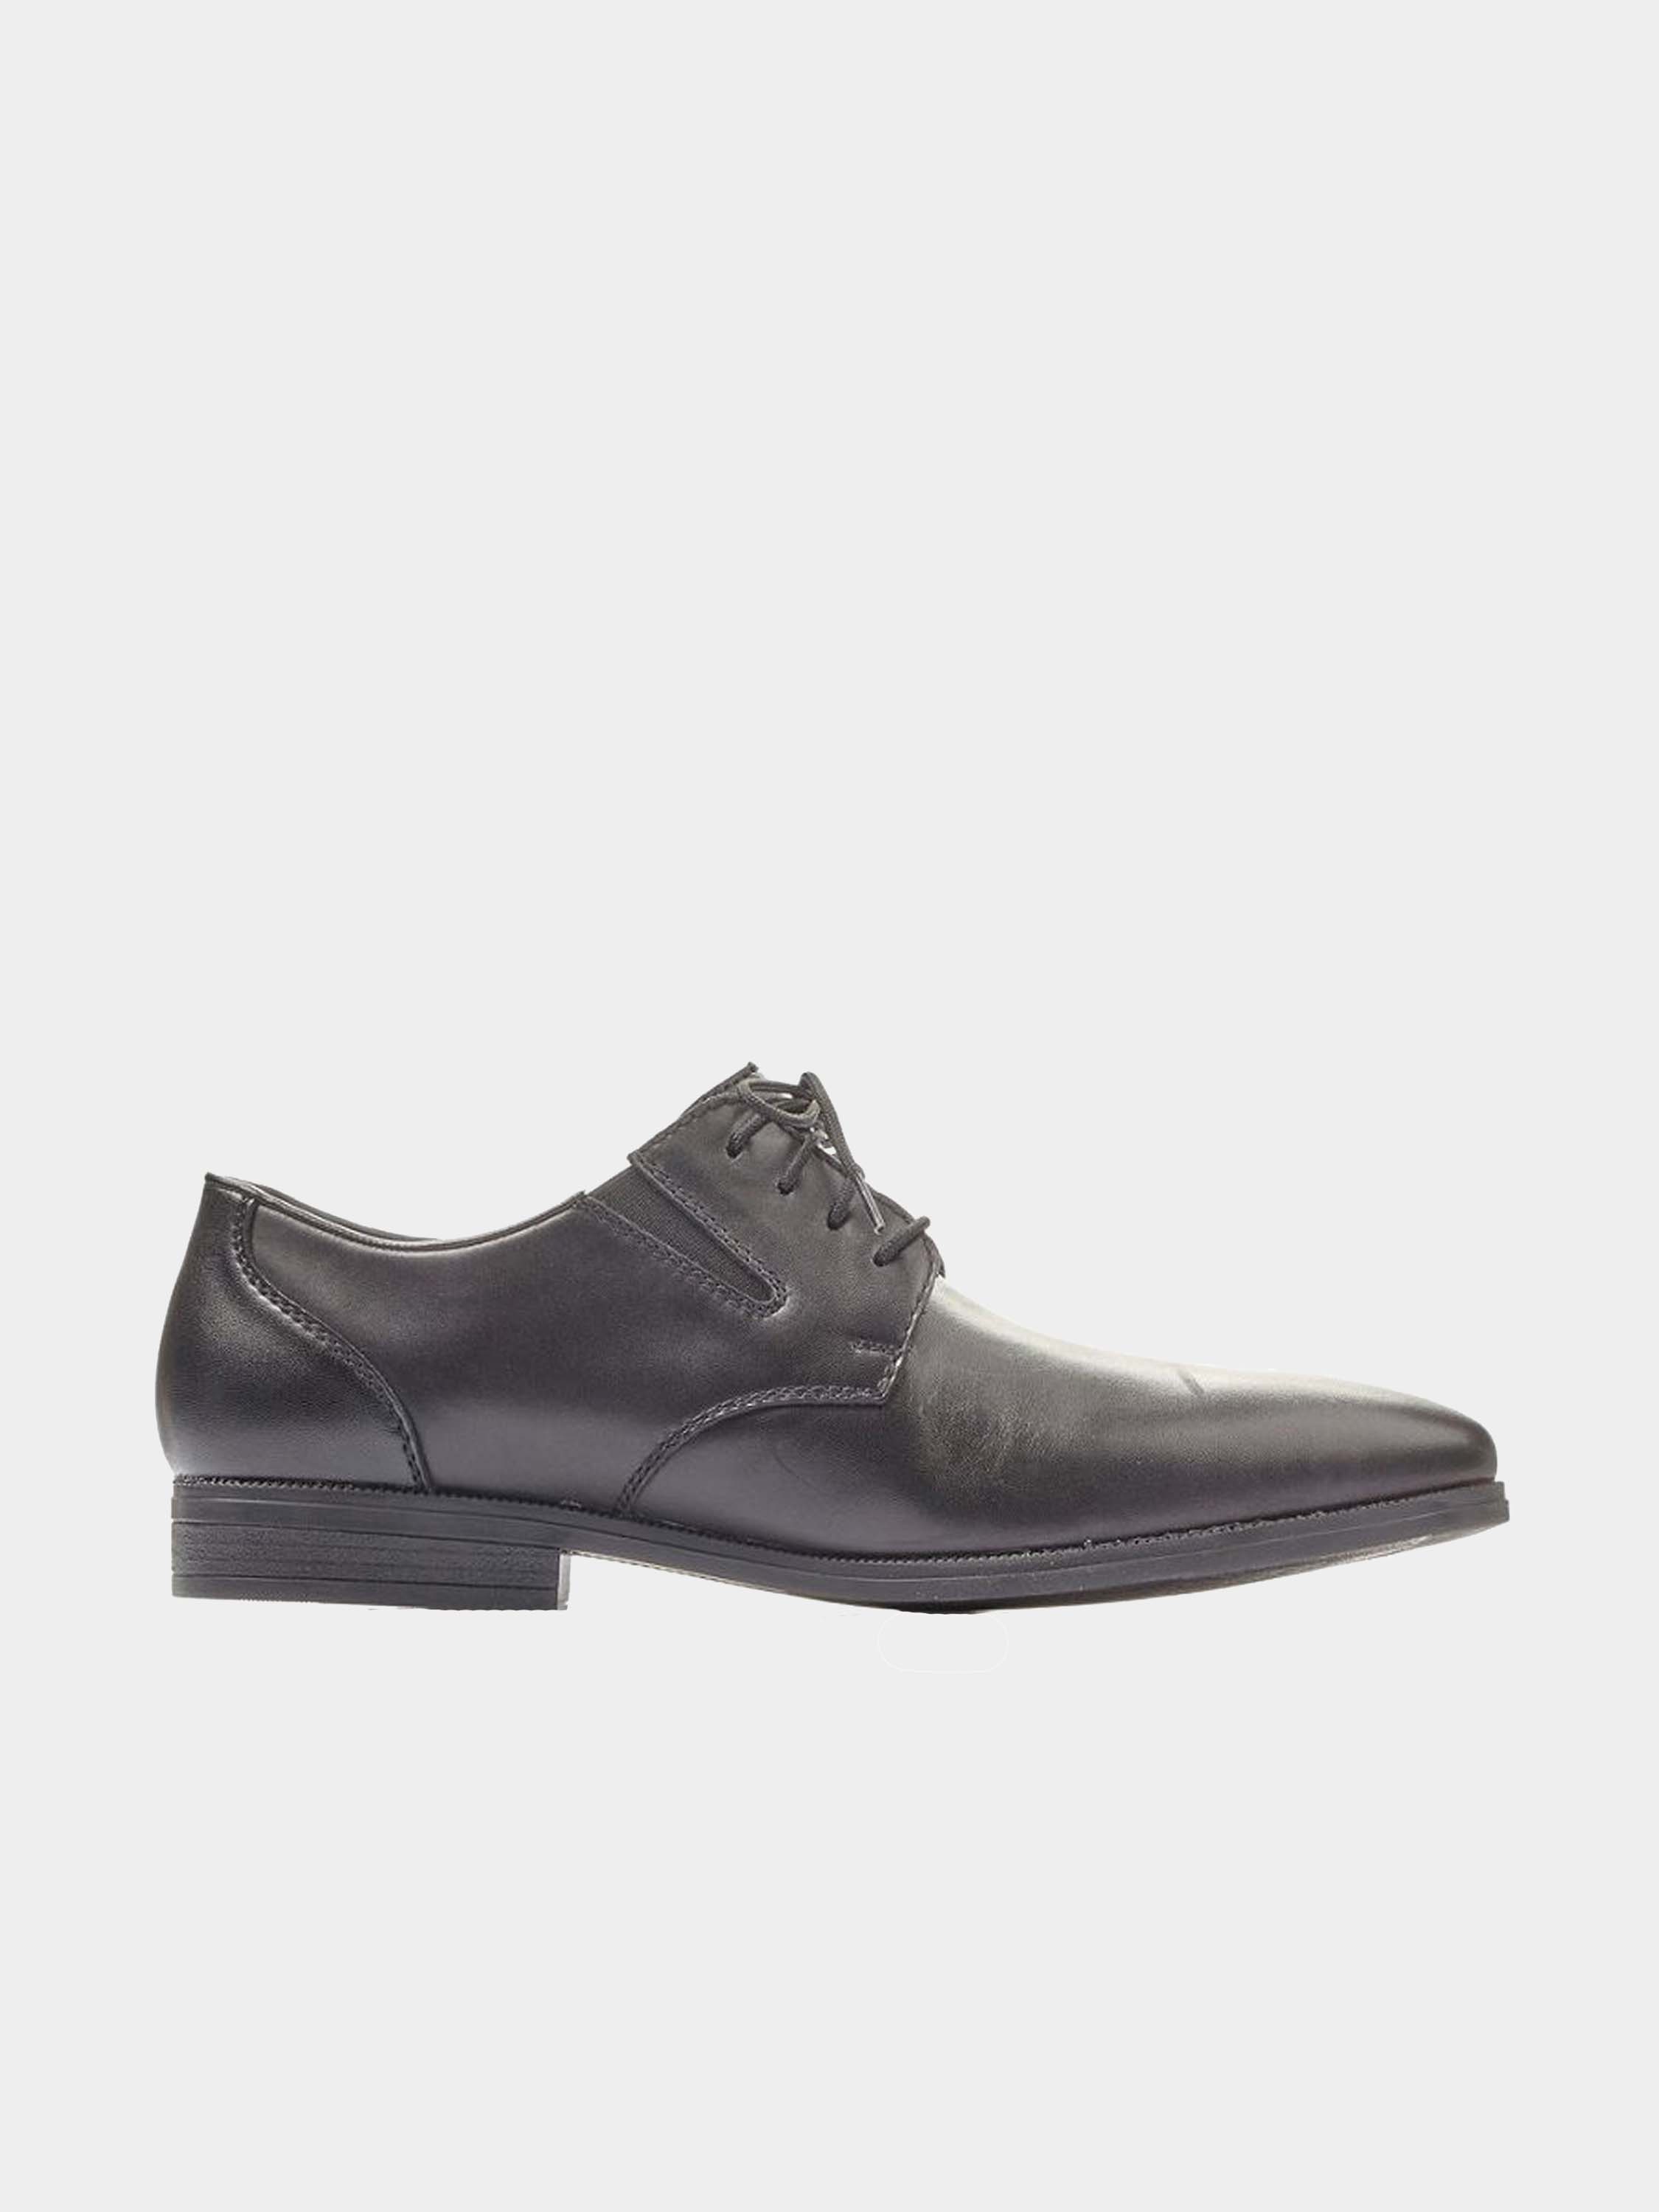 Rieker 11614 Men's Black Leather Formal Shoes